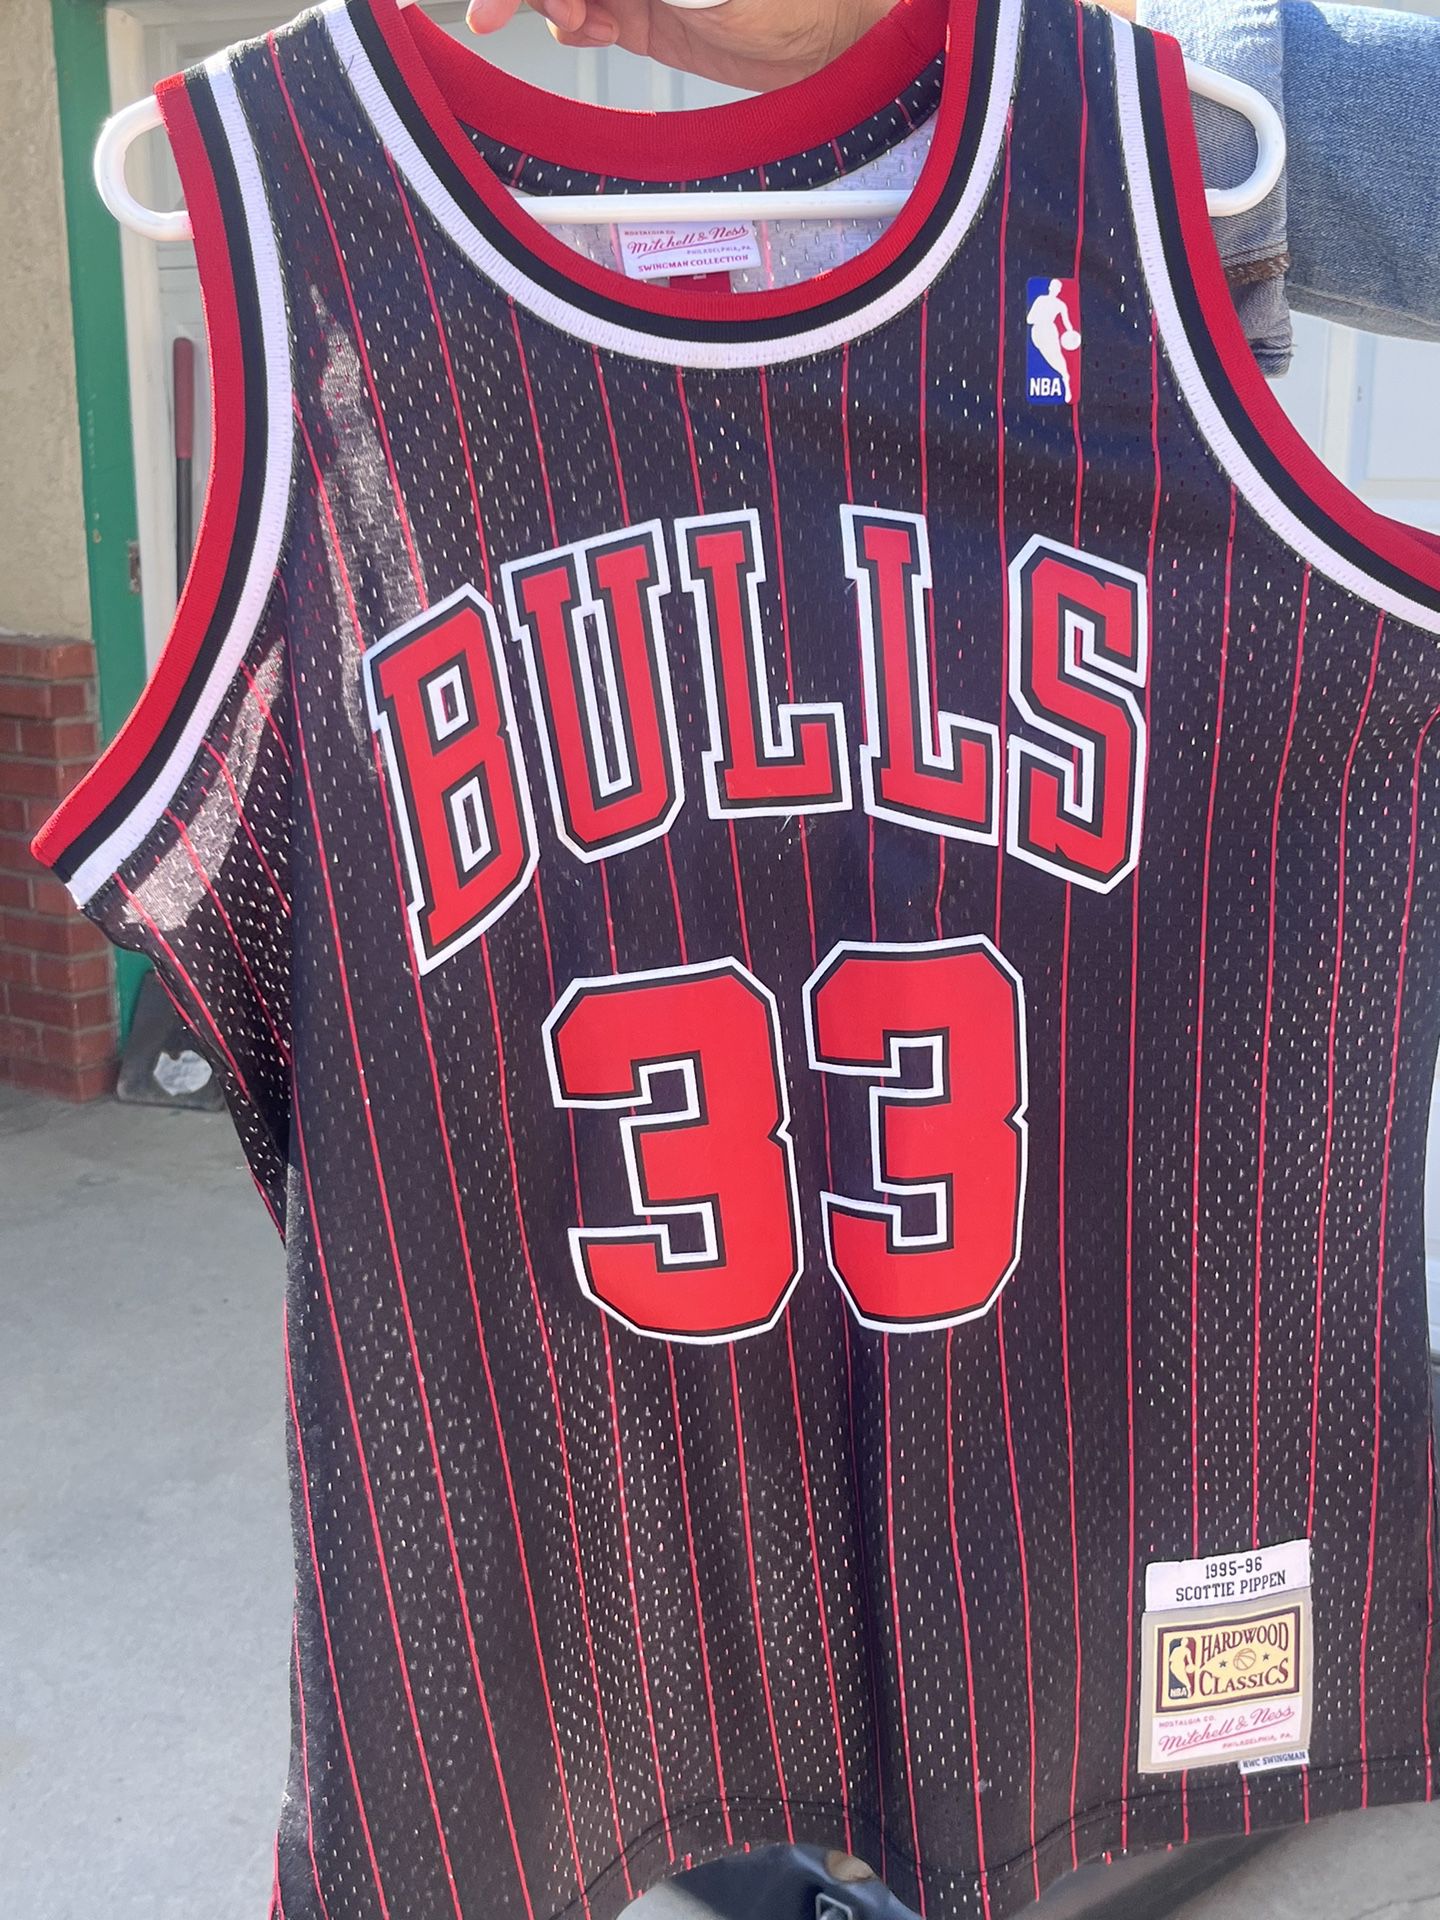 Bulls Scottie Pippen Jersey $60